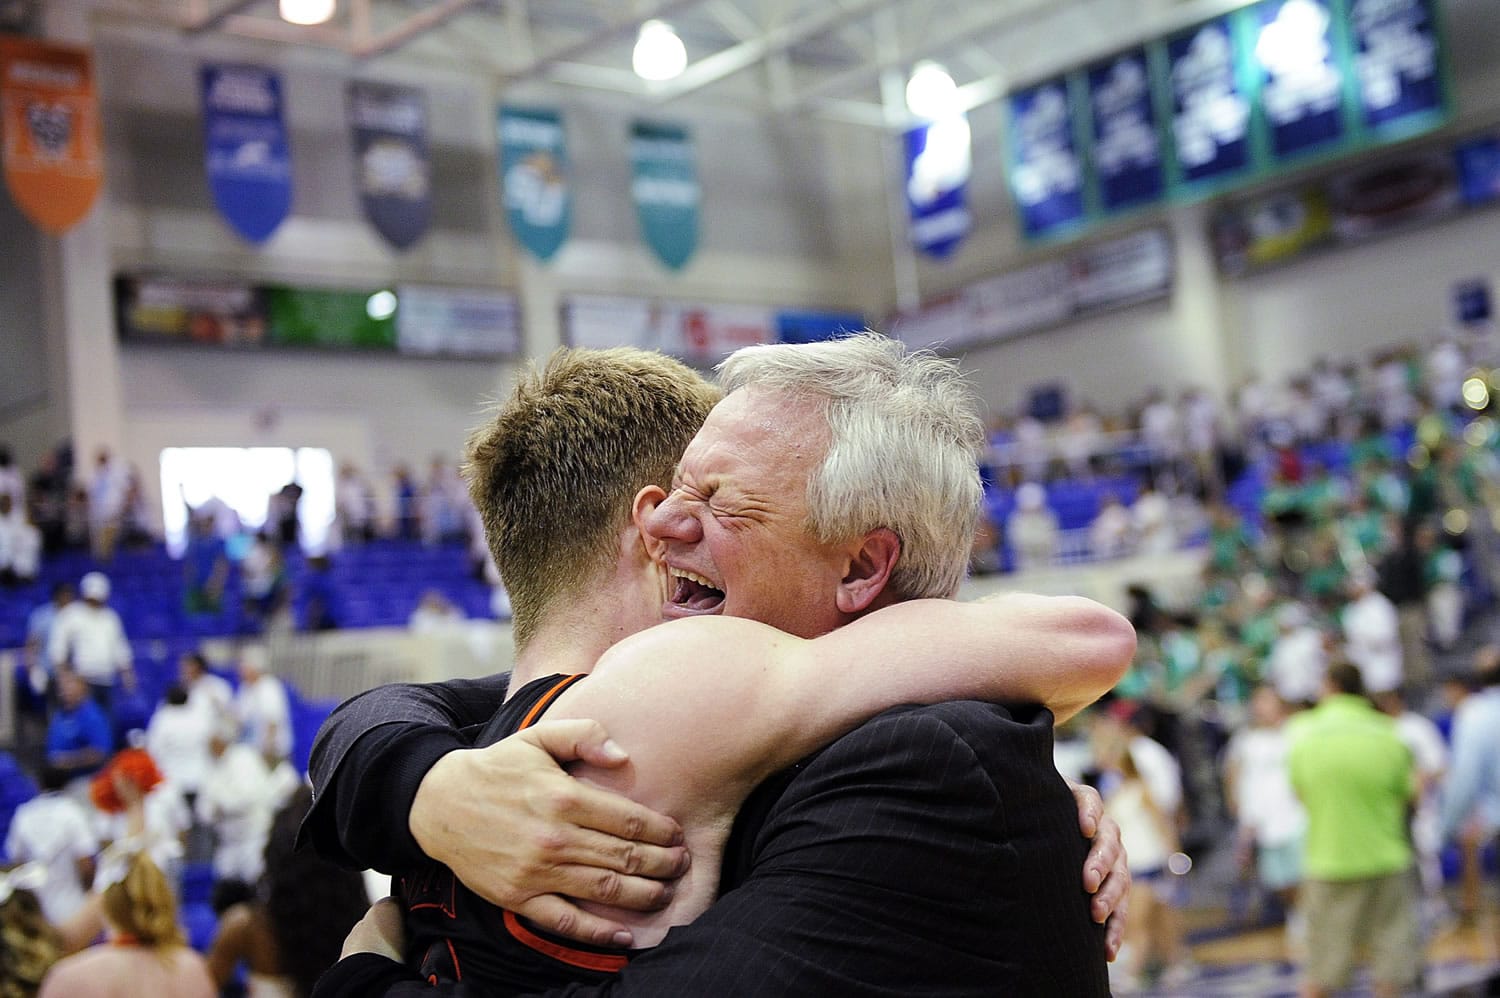 Mercer head coach Bob Hoffman, right, hugs player Jakob Gollon after their win in the Atlantic Sun title game.